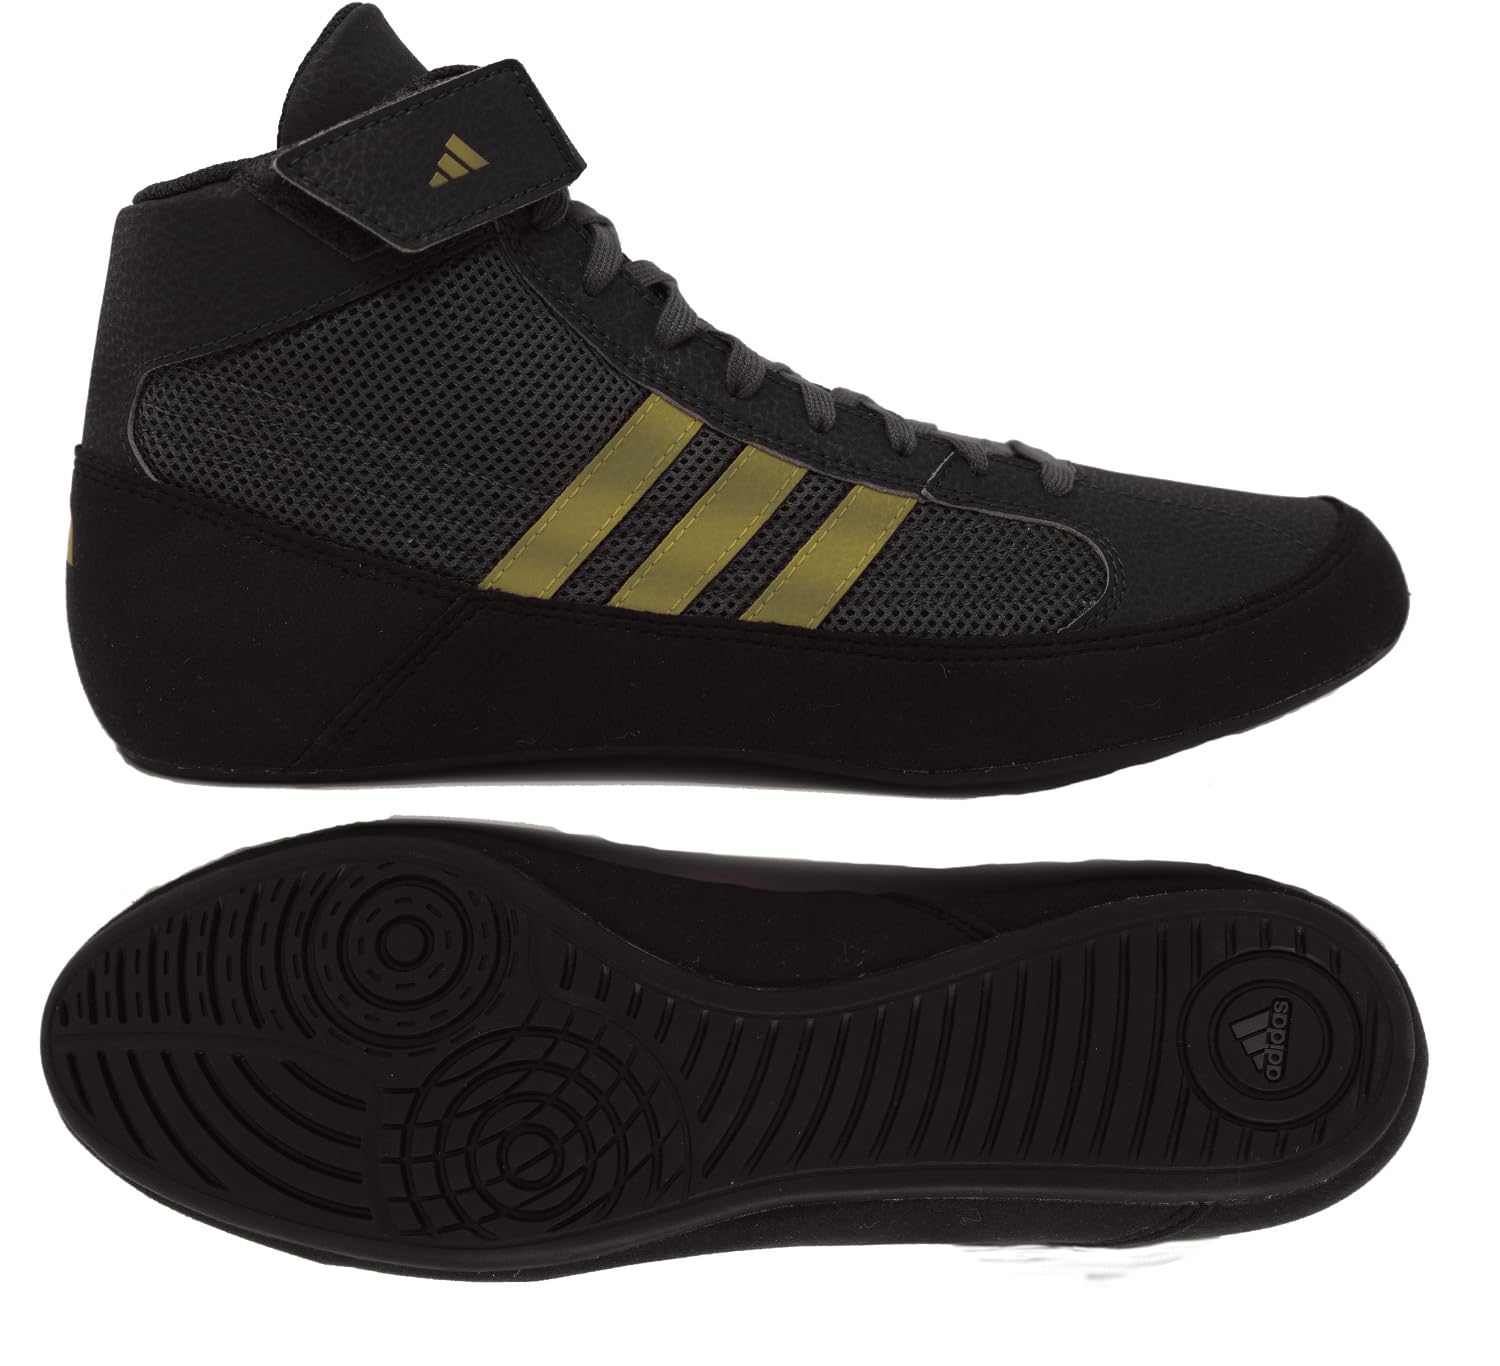 adidas Men's HVC Wrestling Shoes, Black/Charcoal/Metallic Gold, 10.5